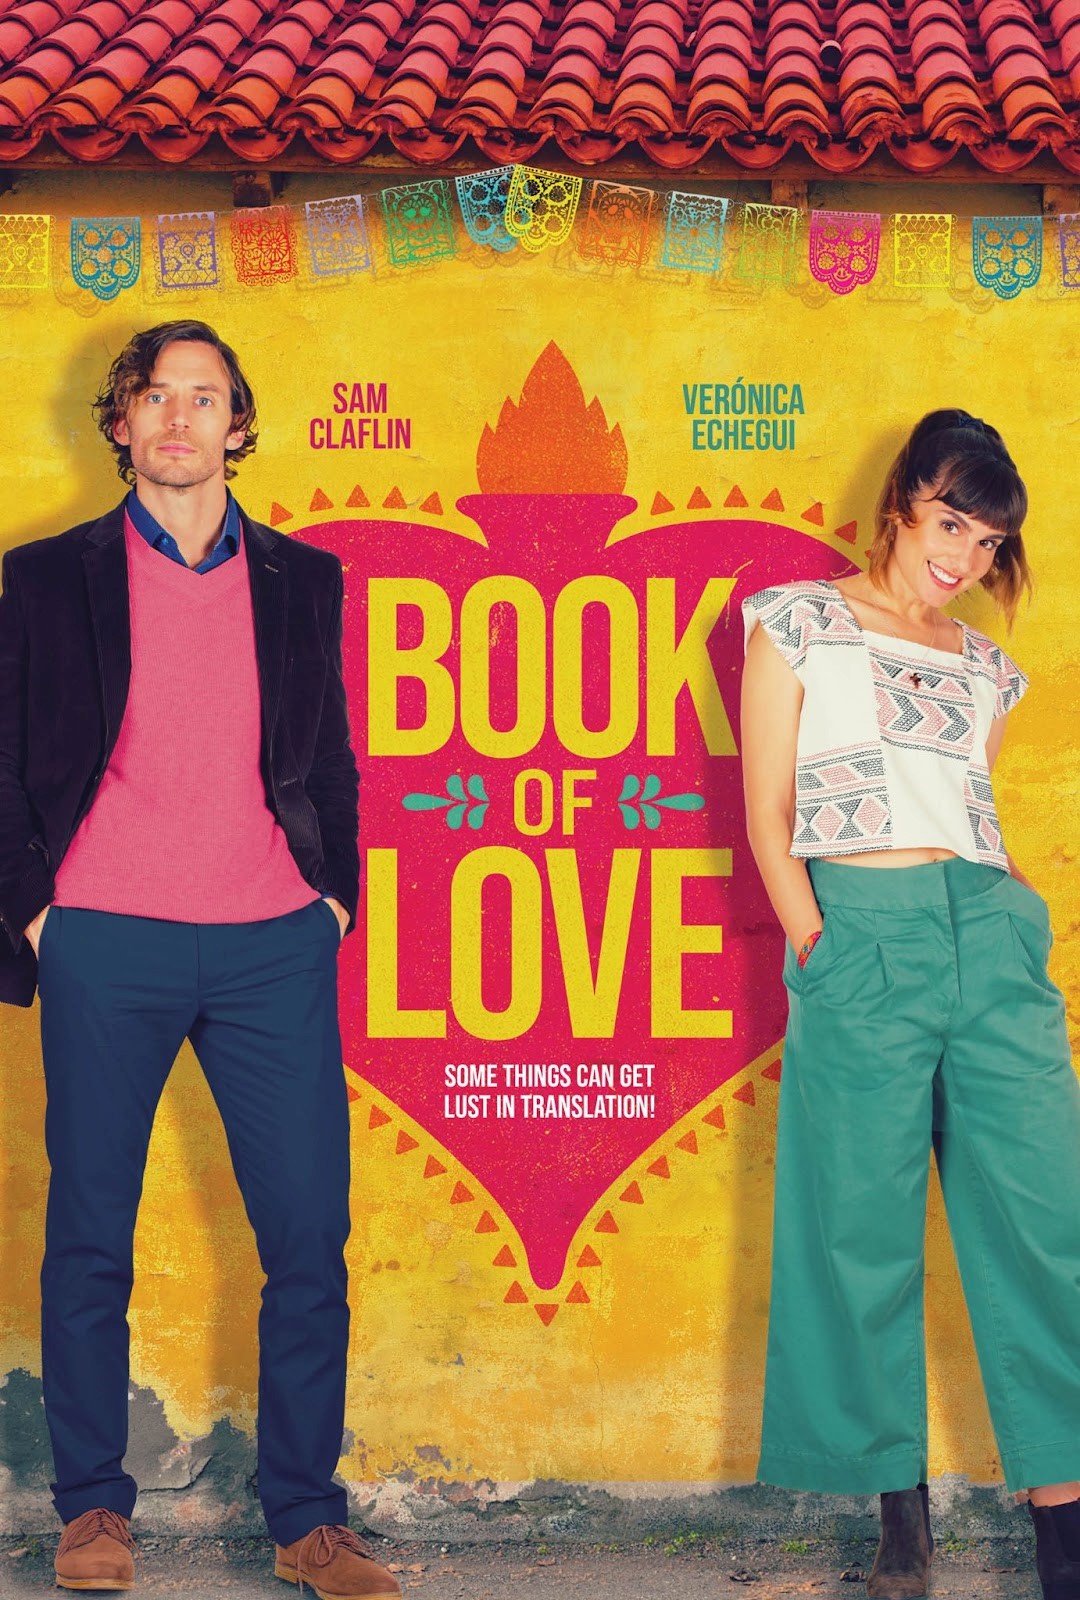 A Book of love